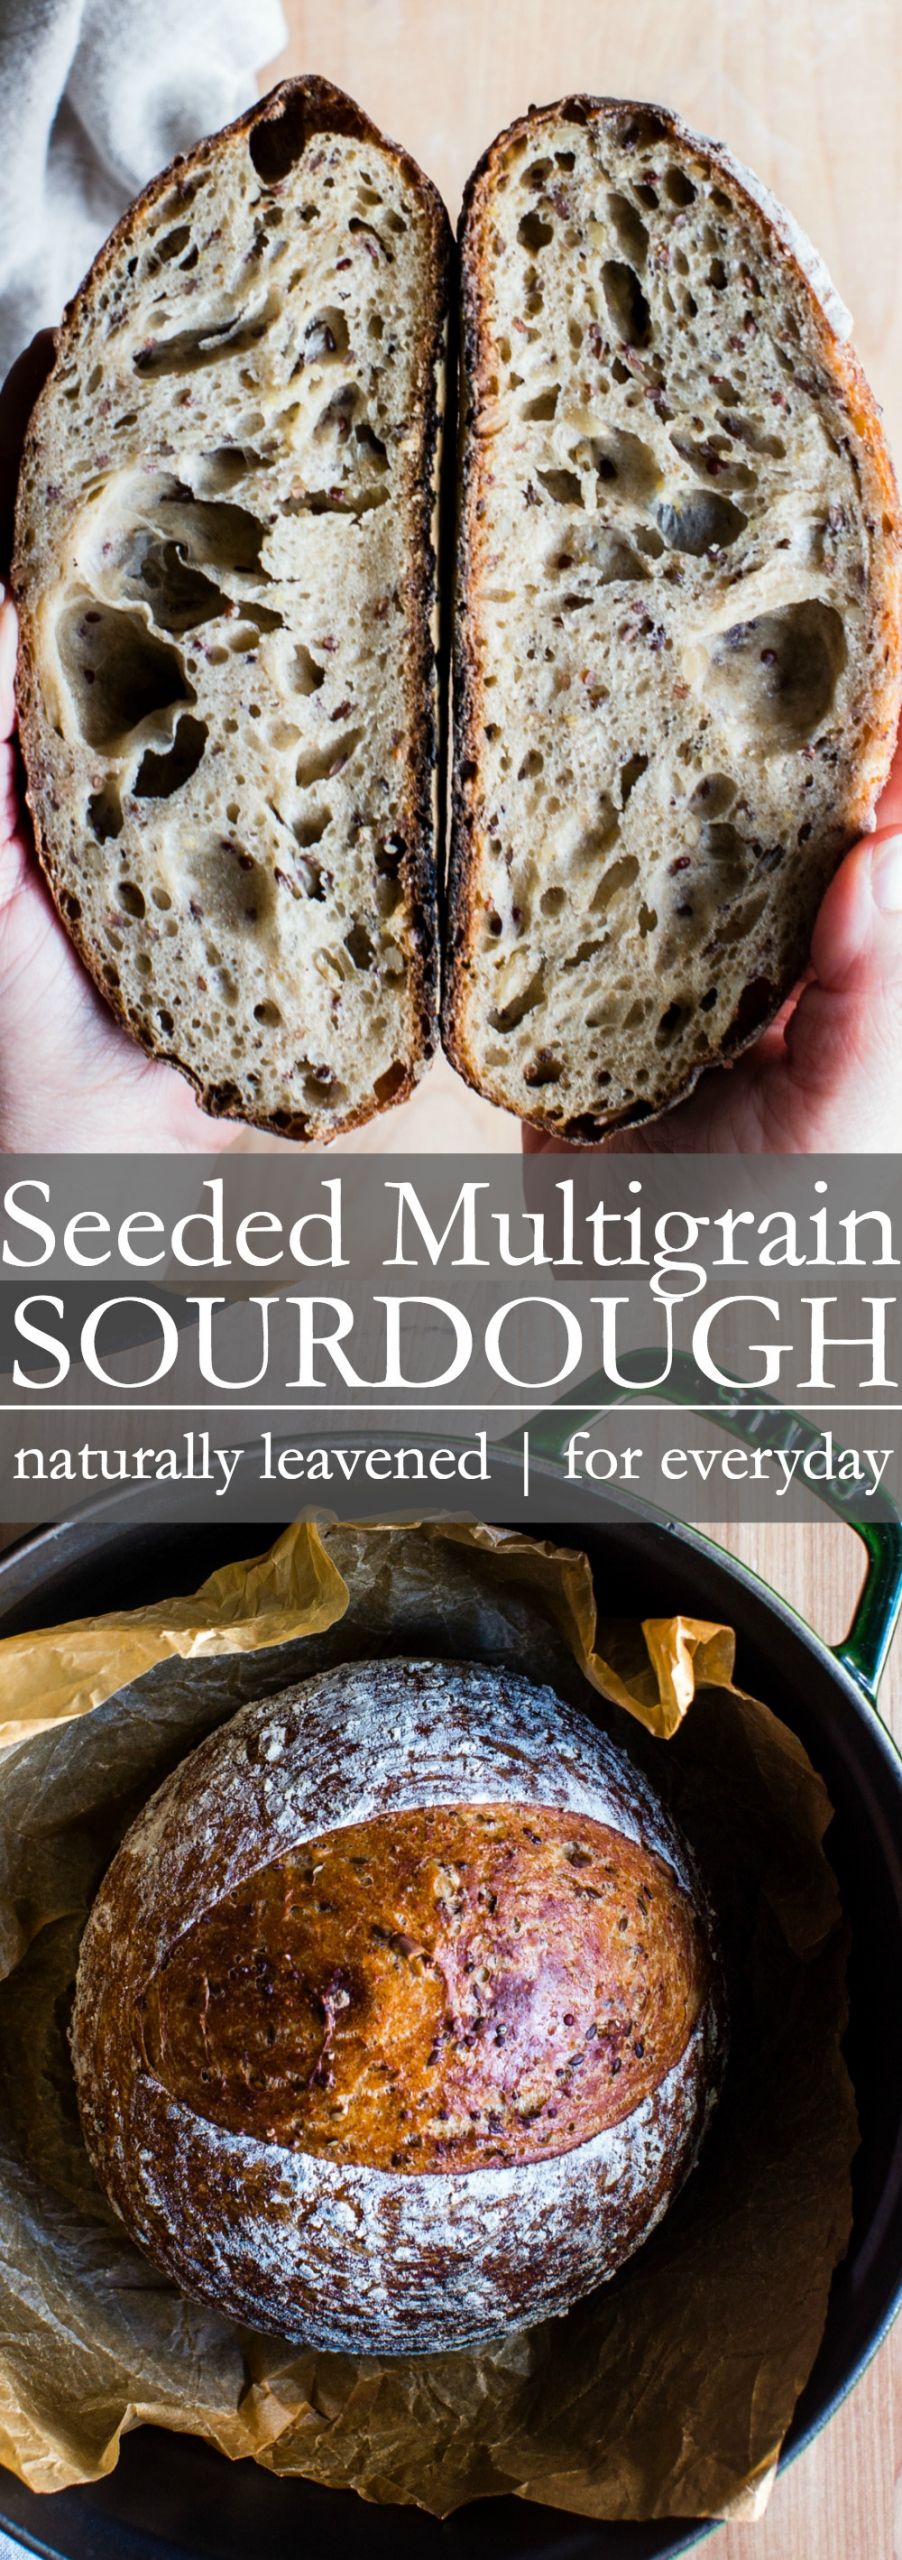 Multigrain Sourdough Bread
 Seeded Multigrain Sourdough Bread